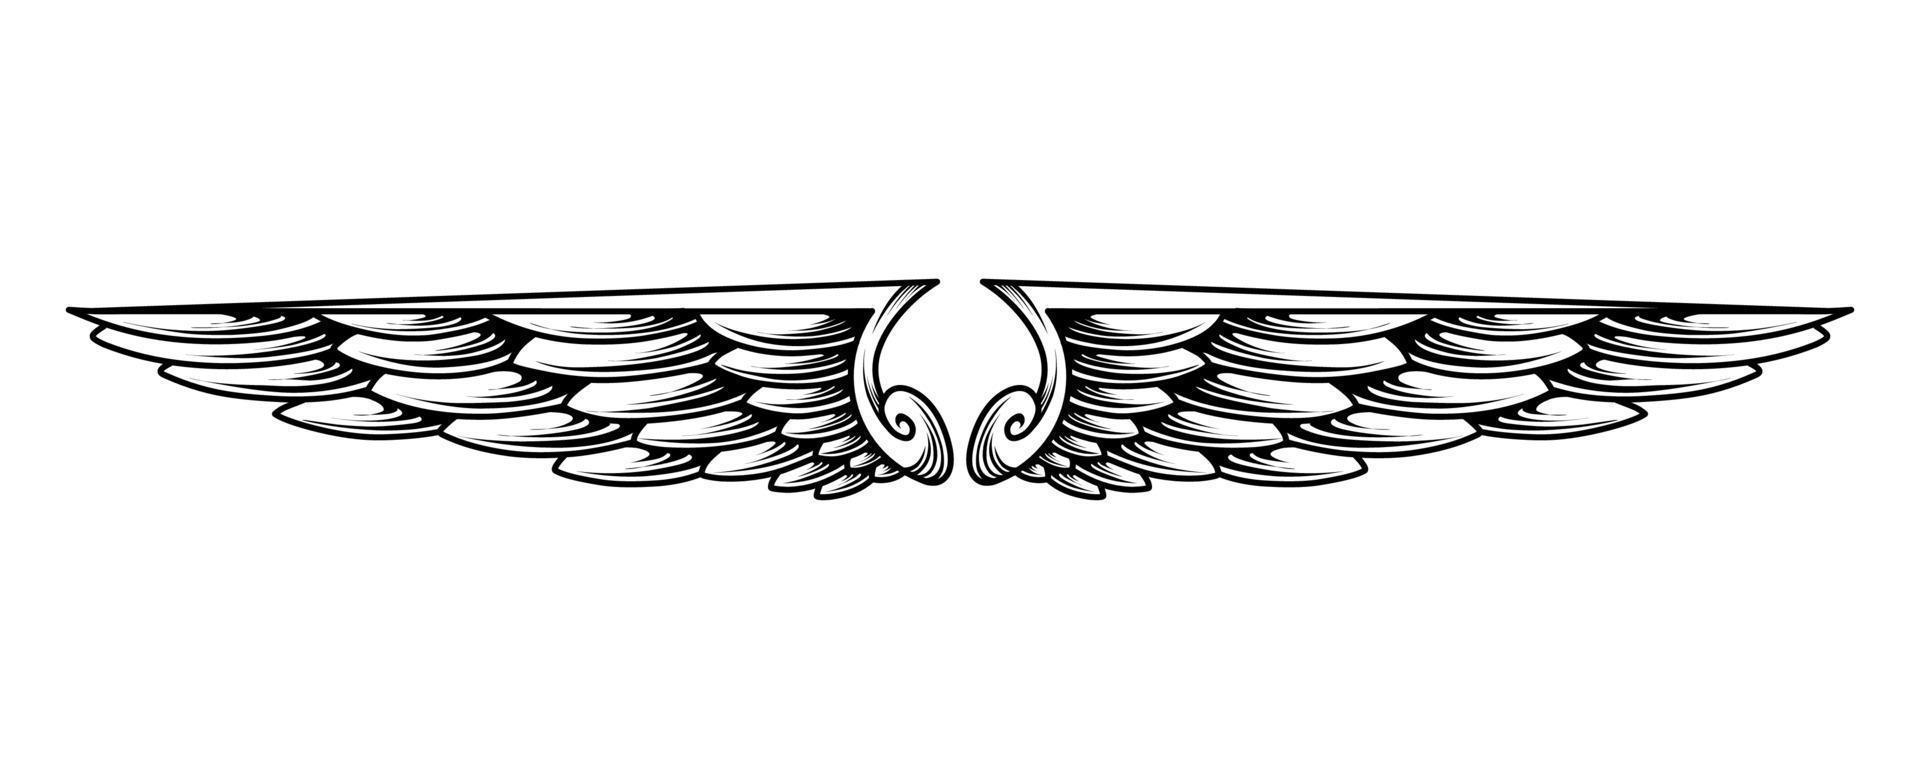 free vector angel wings illustration design